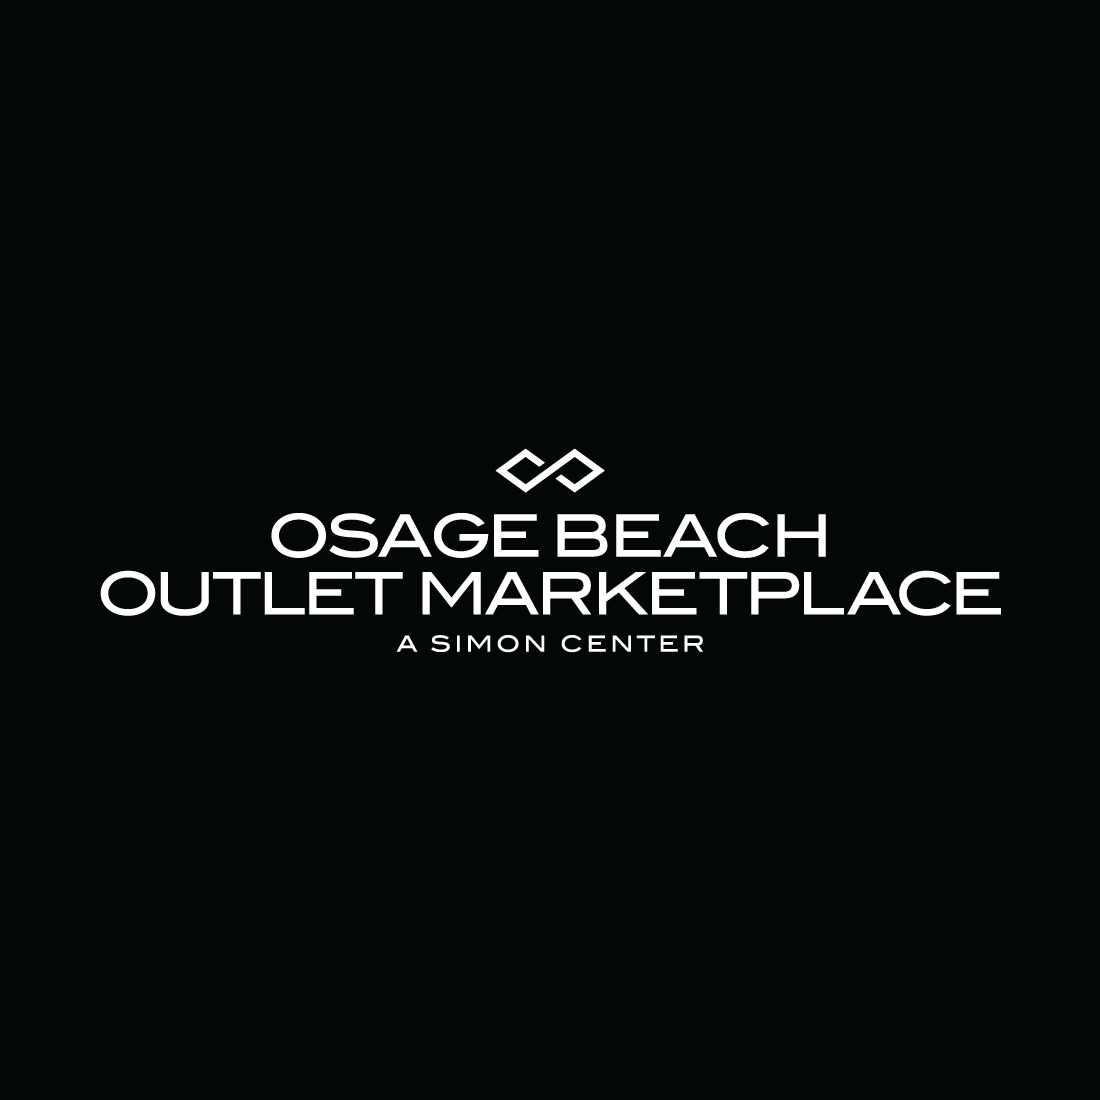 Osage Beach Outlet Marketplace, Osage Beach Missouri (MO) - www.ermes-unice.fr